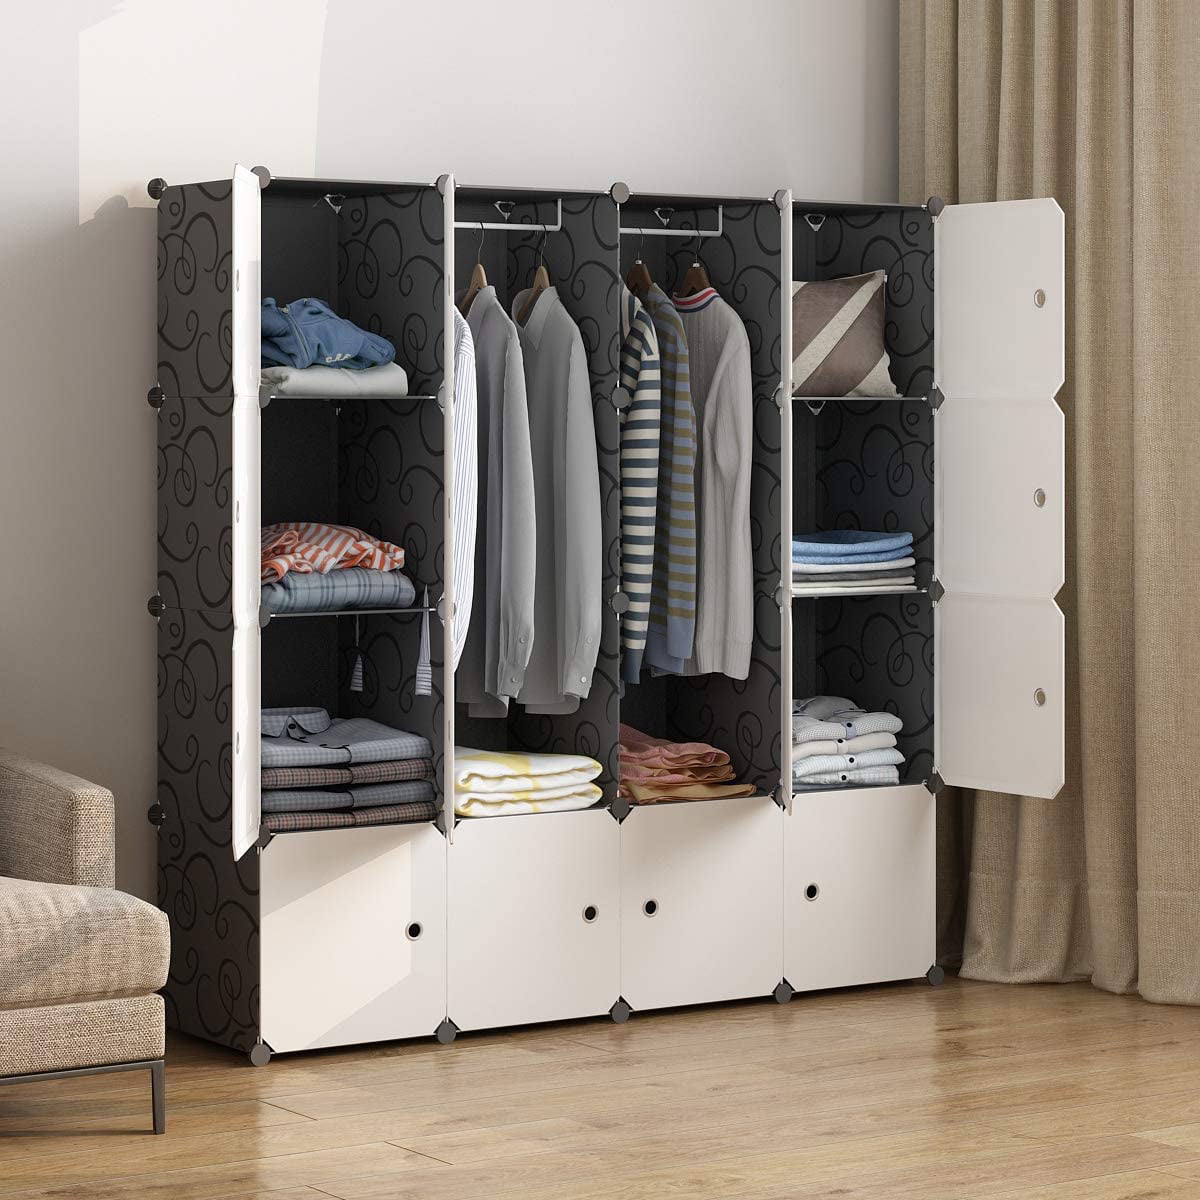 DIY 12 Cube Portable Closet Storage Organizer Clothes Wardrobe Cabinet W/Doors 